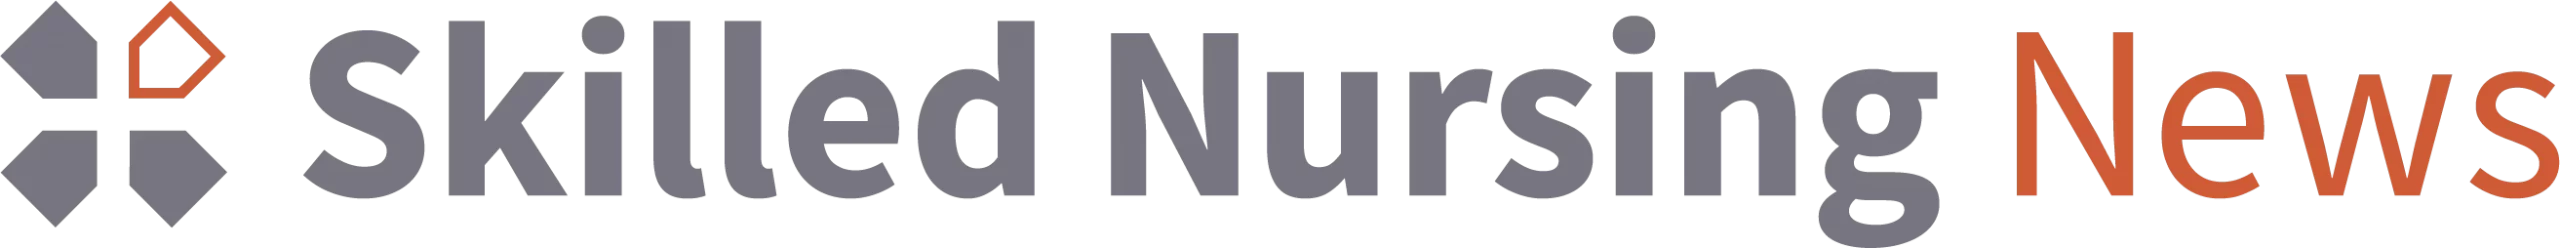 skilled-nursing-news-logo